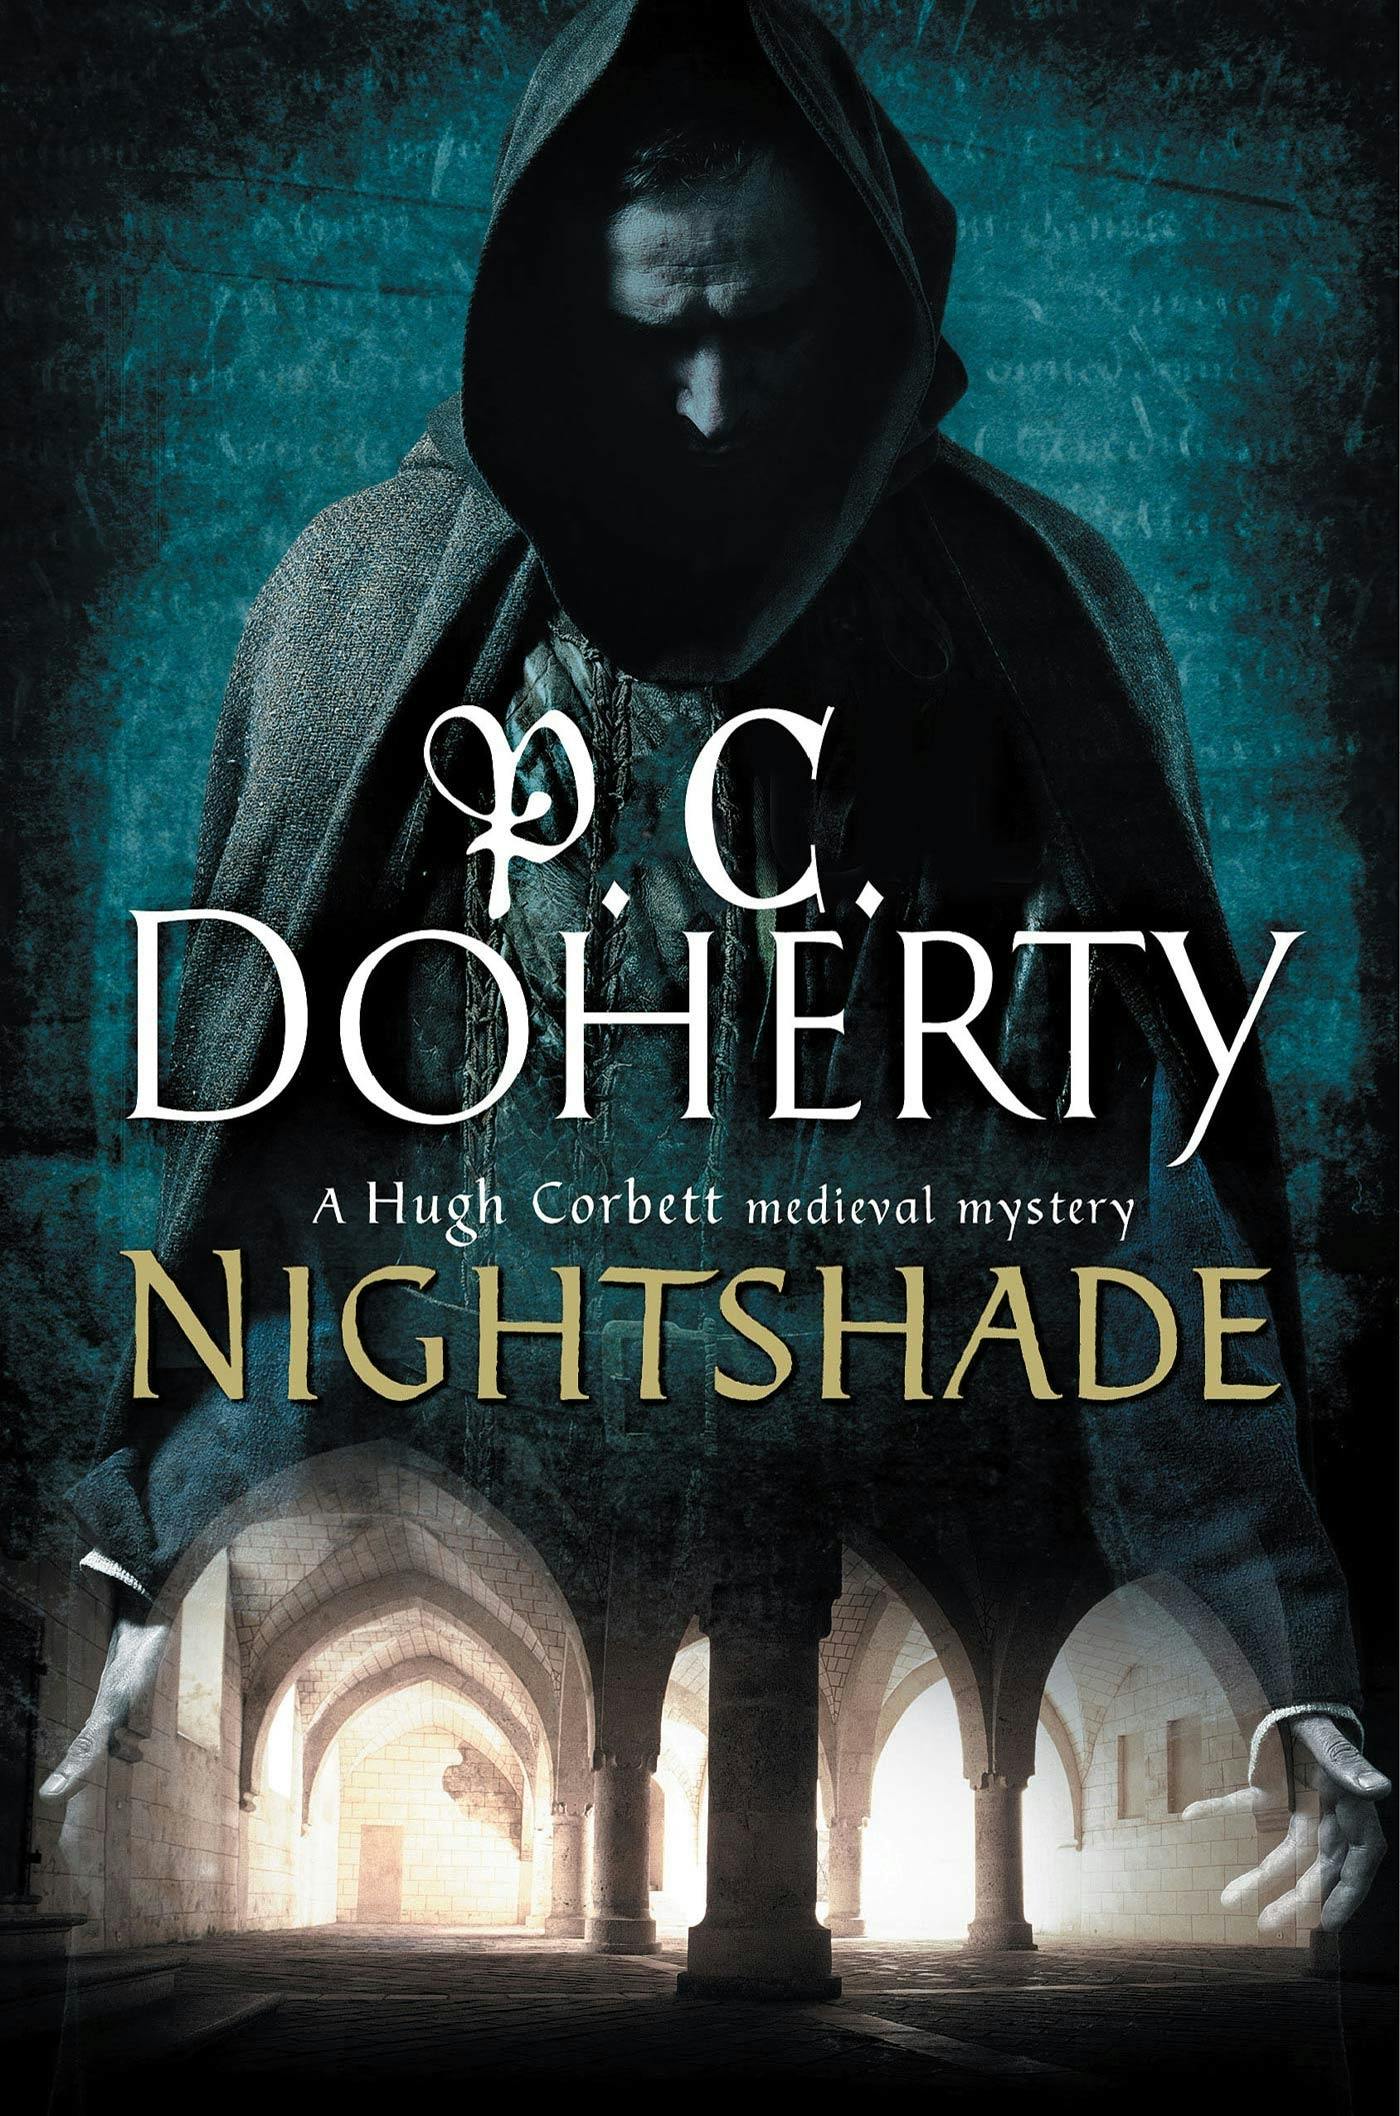 nightshade book series